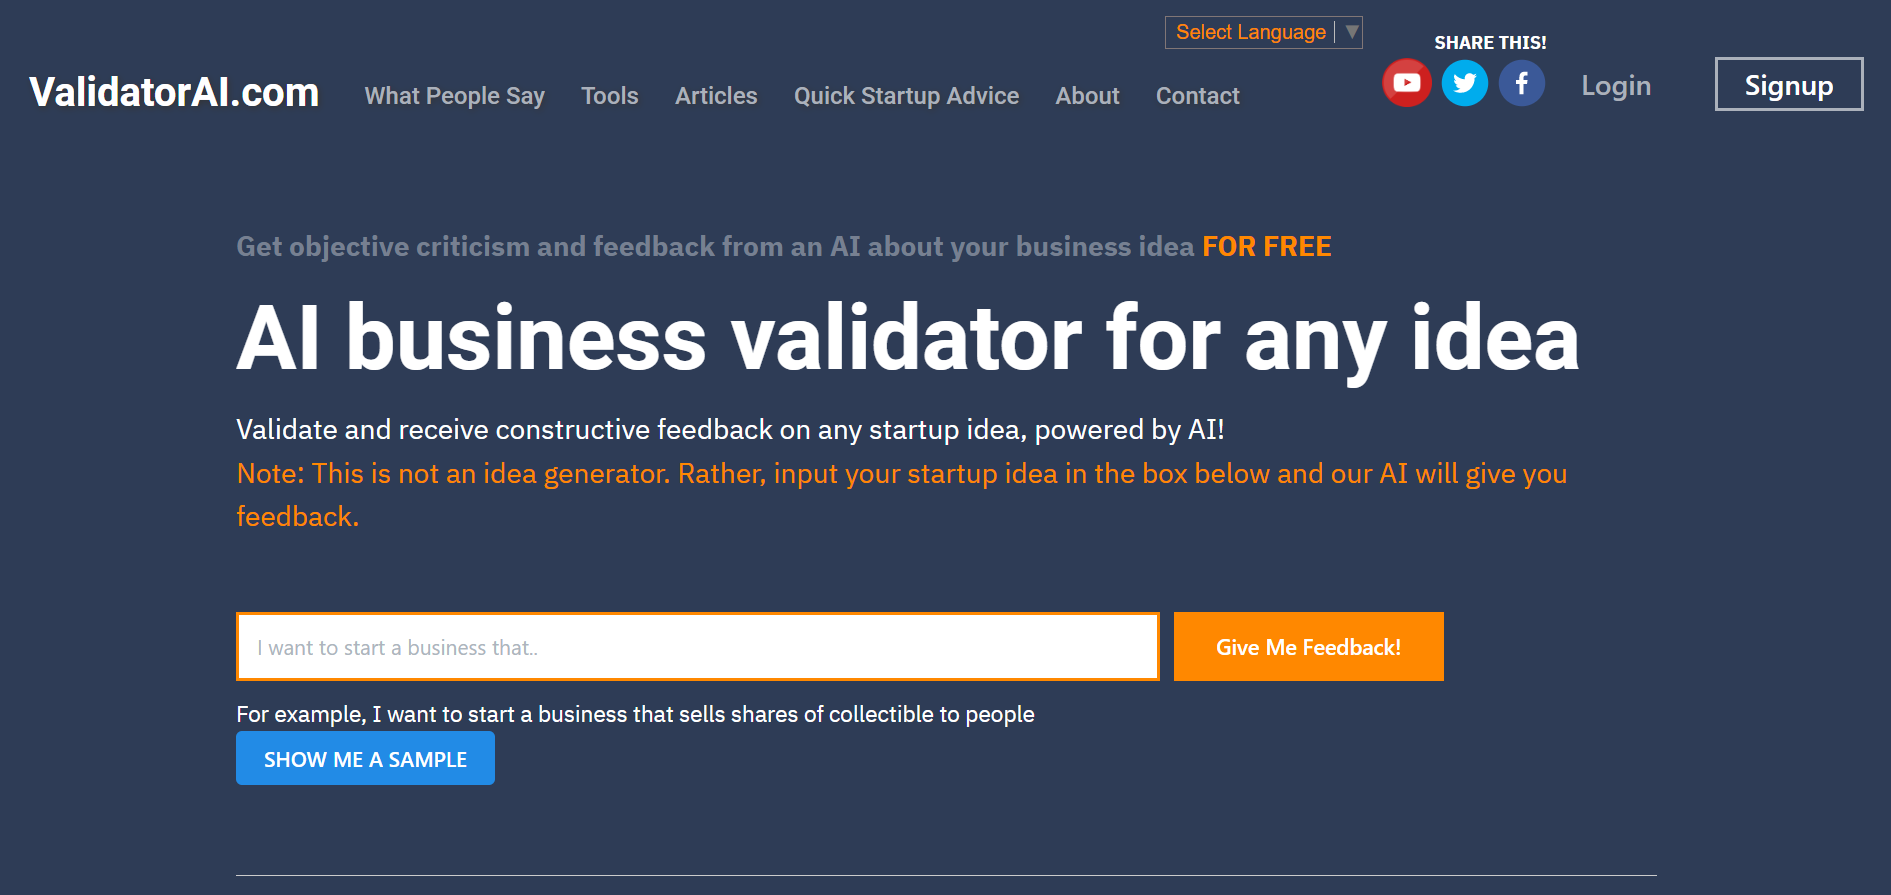 Get Constructive Feedback on Your Business Idea with Validatorai.com